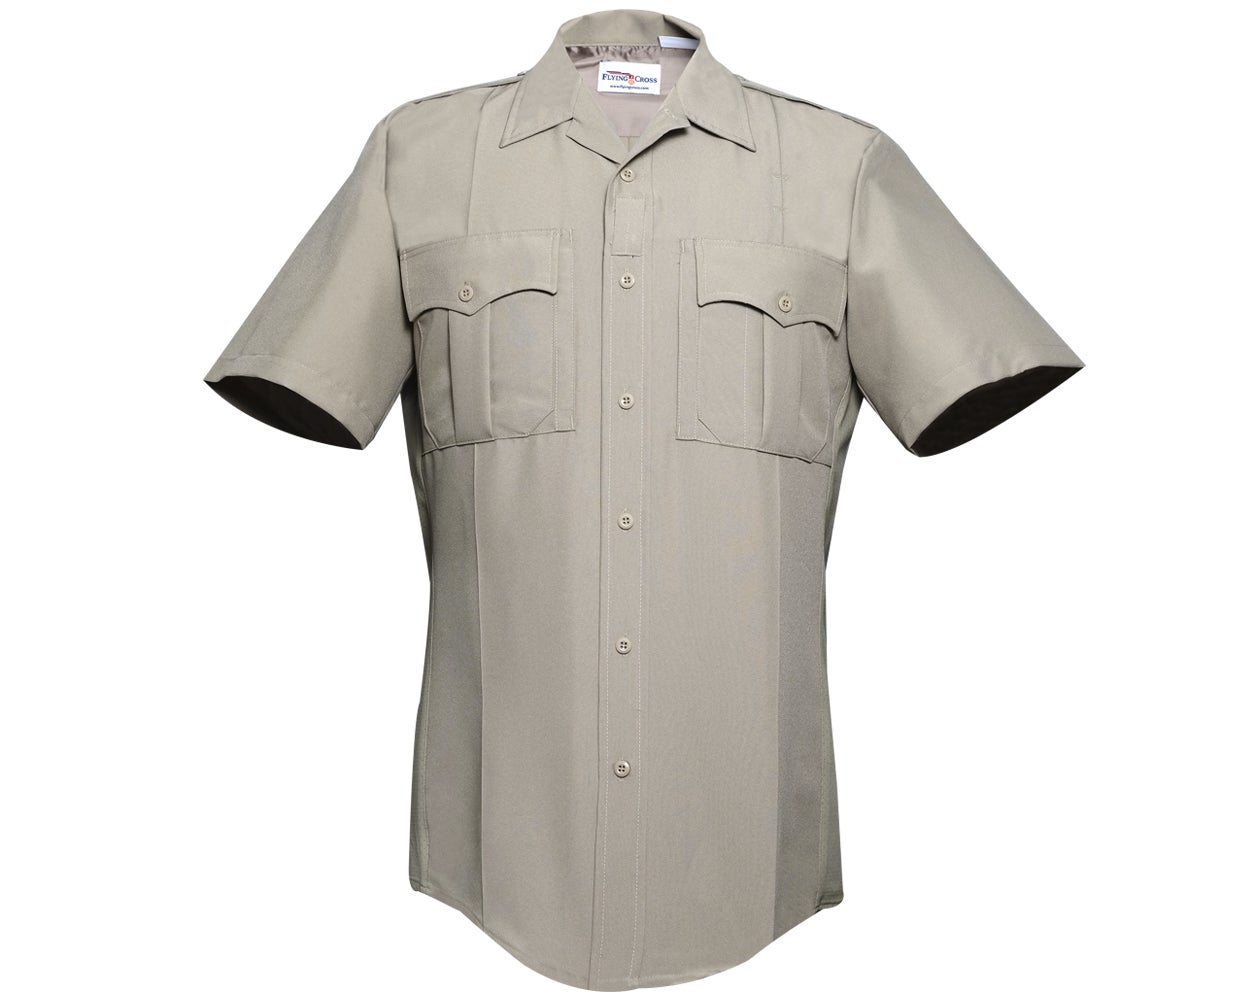 Flying Cross Men's Command Power Stretch Short Sleeve Uniform Shirt with Zipper 92R78Z - Silver Tan, 5XL